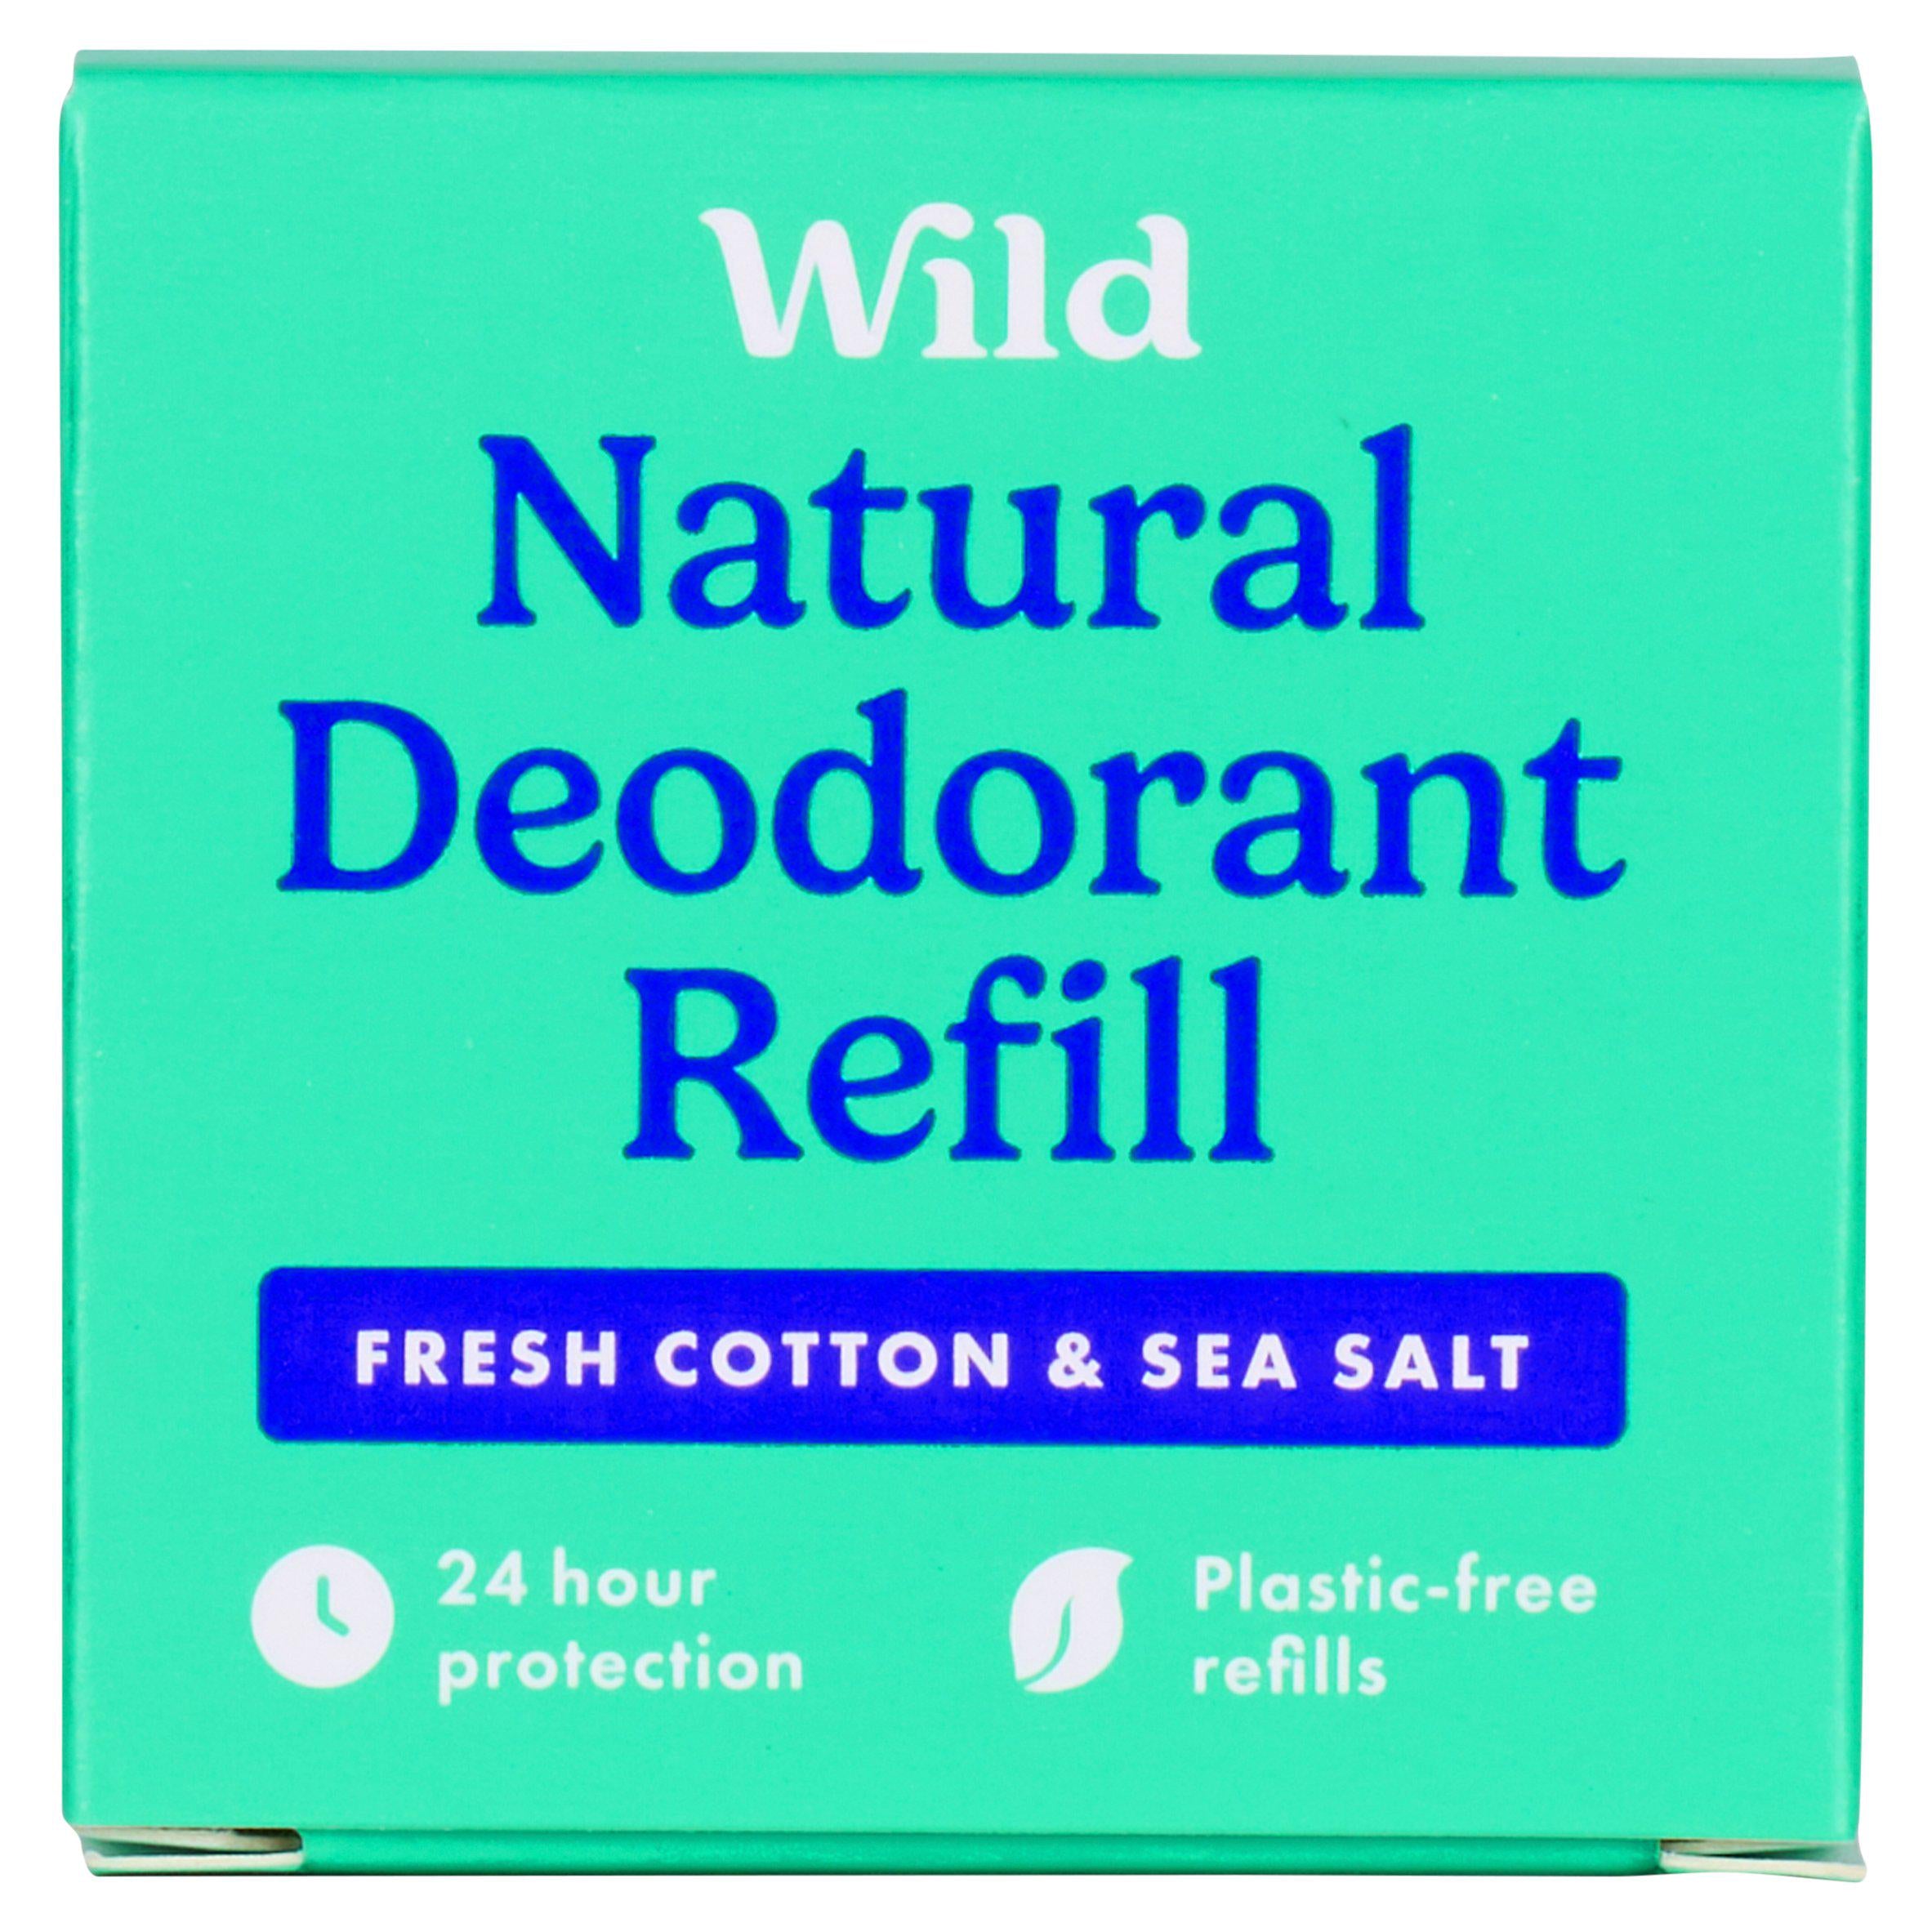 Wild Natural Deodorant Refill Fresh Cotton & Sea Salt 40g deodorants & body sprays Sainsburys   